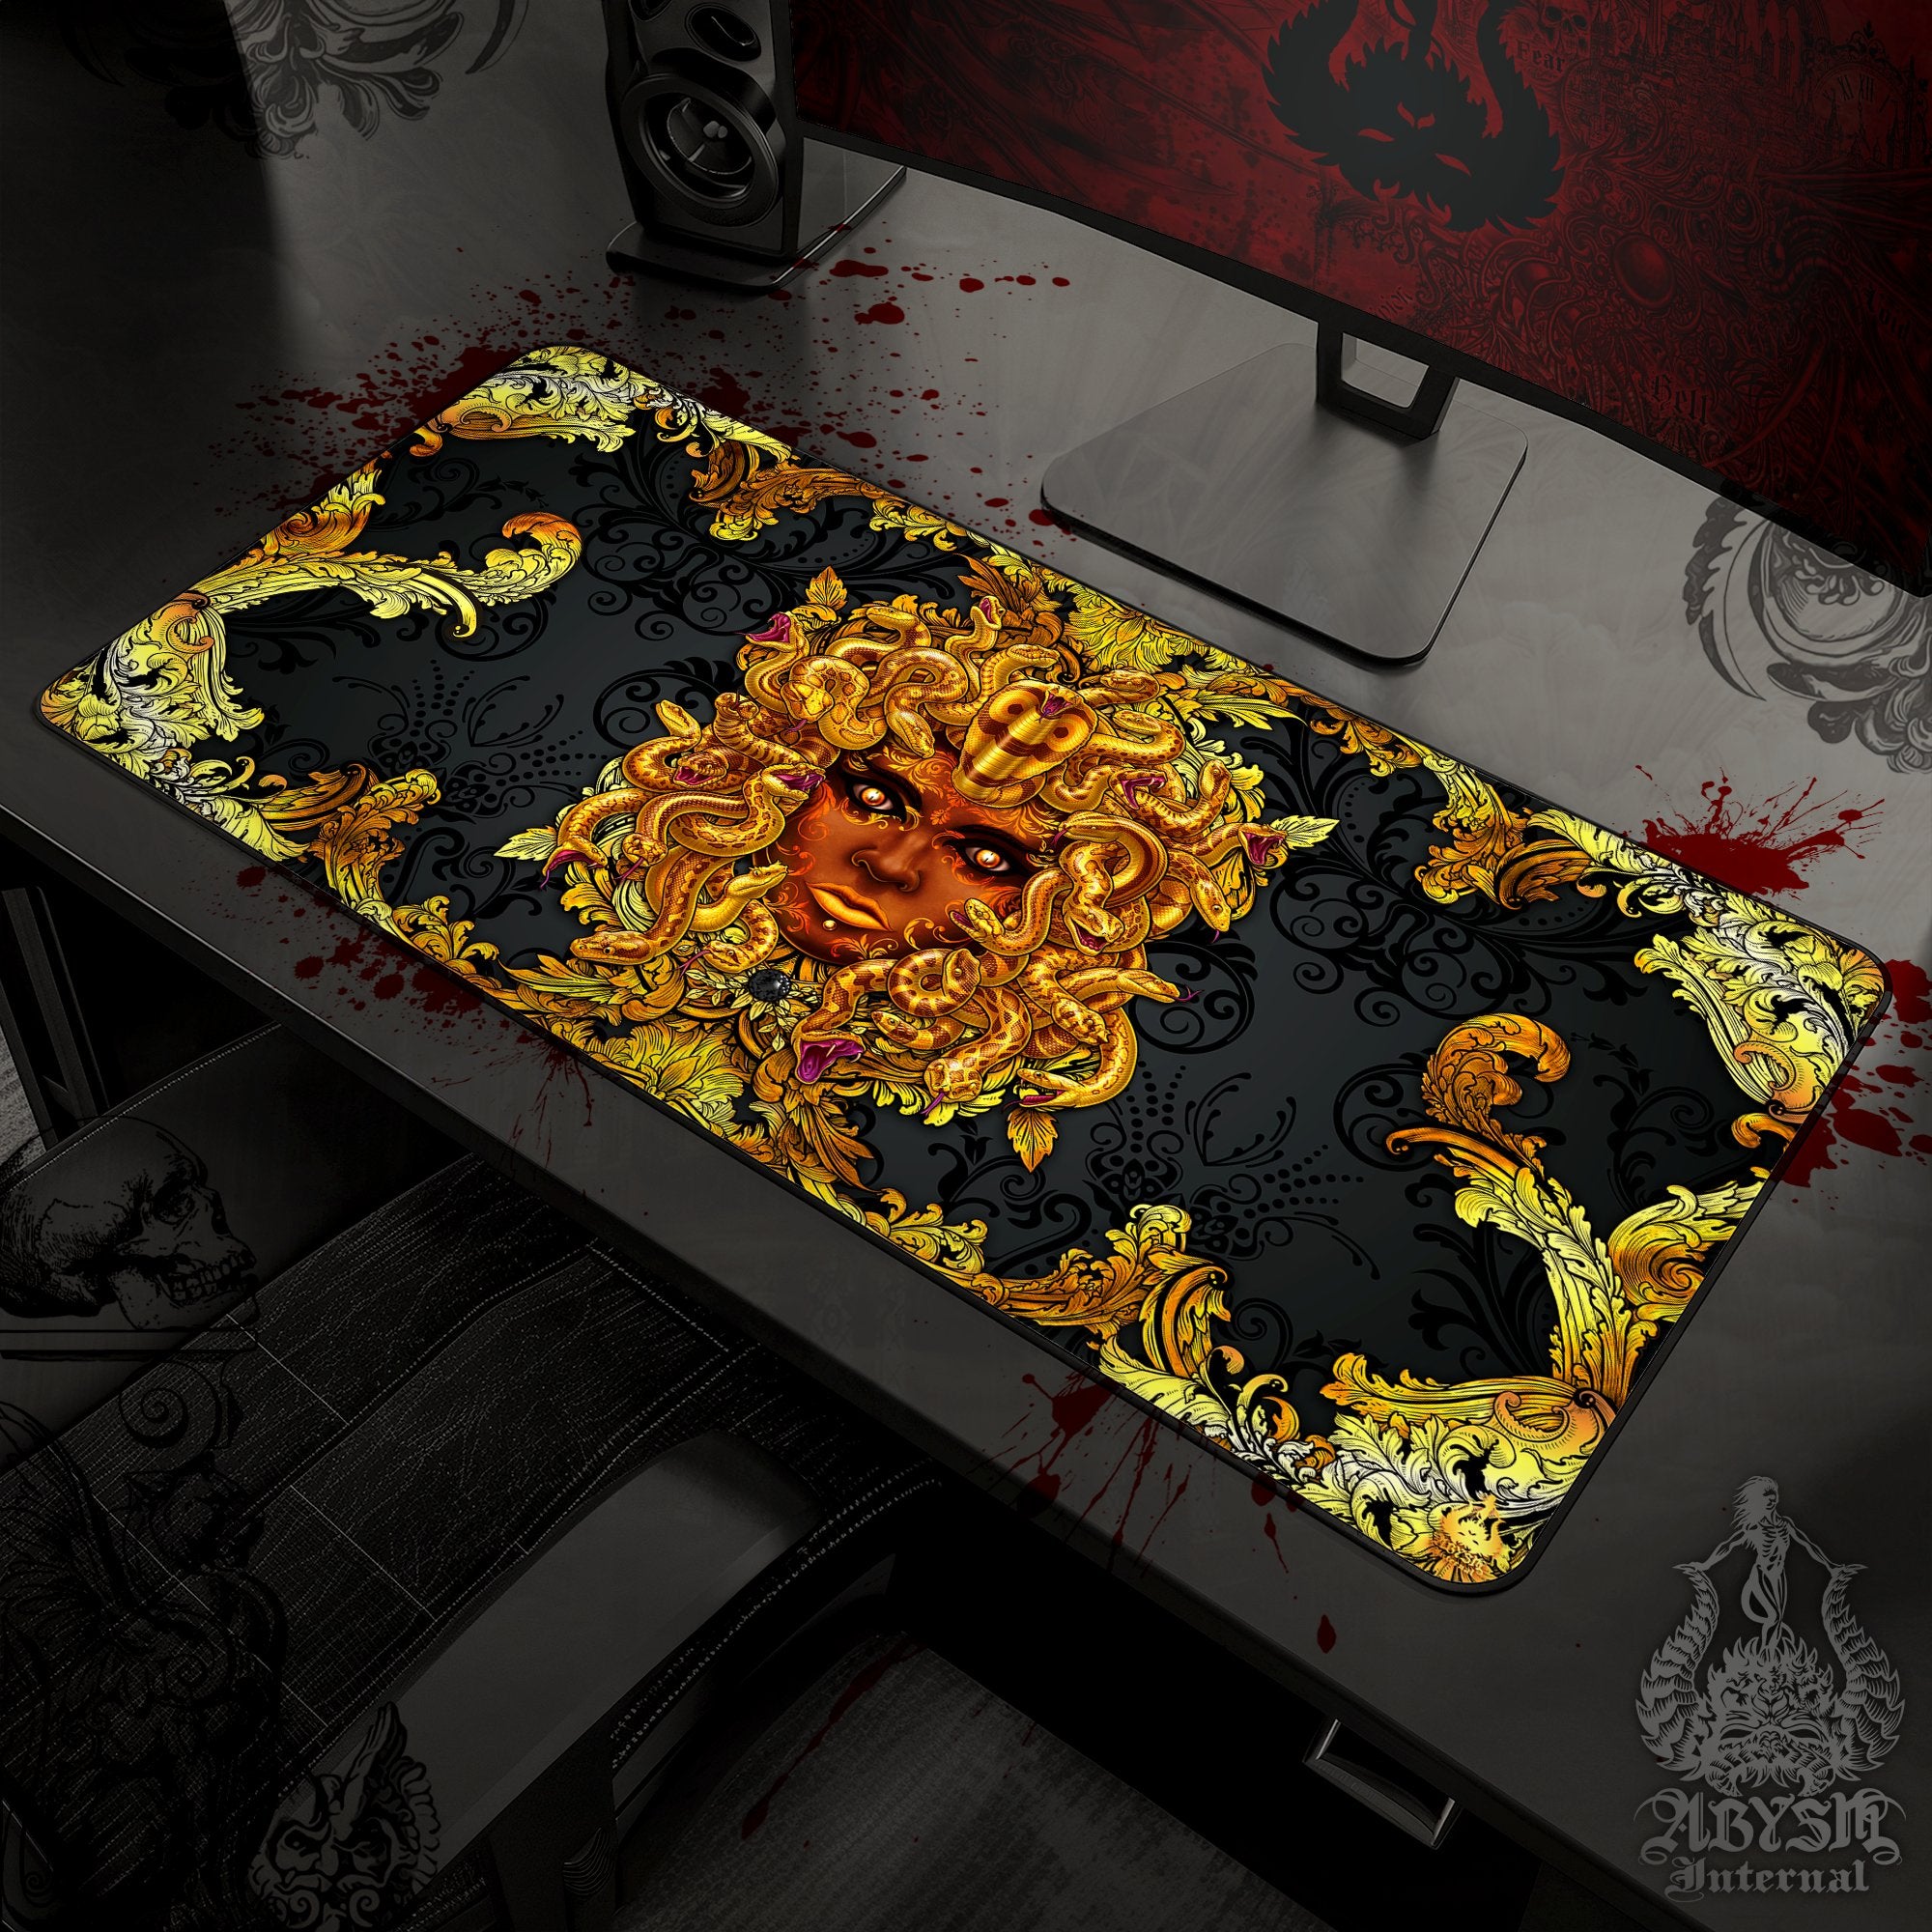 Gold Medusa Mouse Pad, Baroque Skull Gaming Desk Mat, Ornamented Workpad, Gamer Table Protector Cover, Dark Fantasy Art Print - 2 Options - Abysm Internal